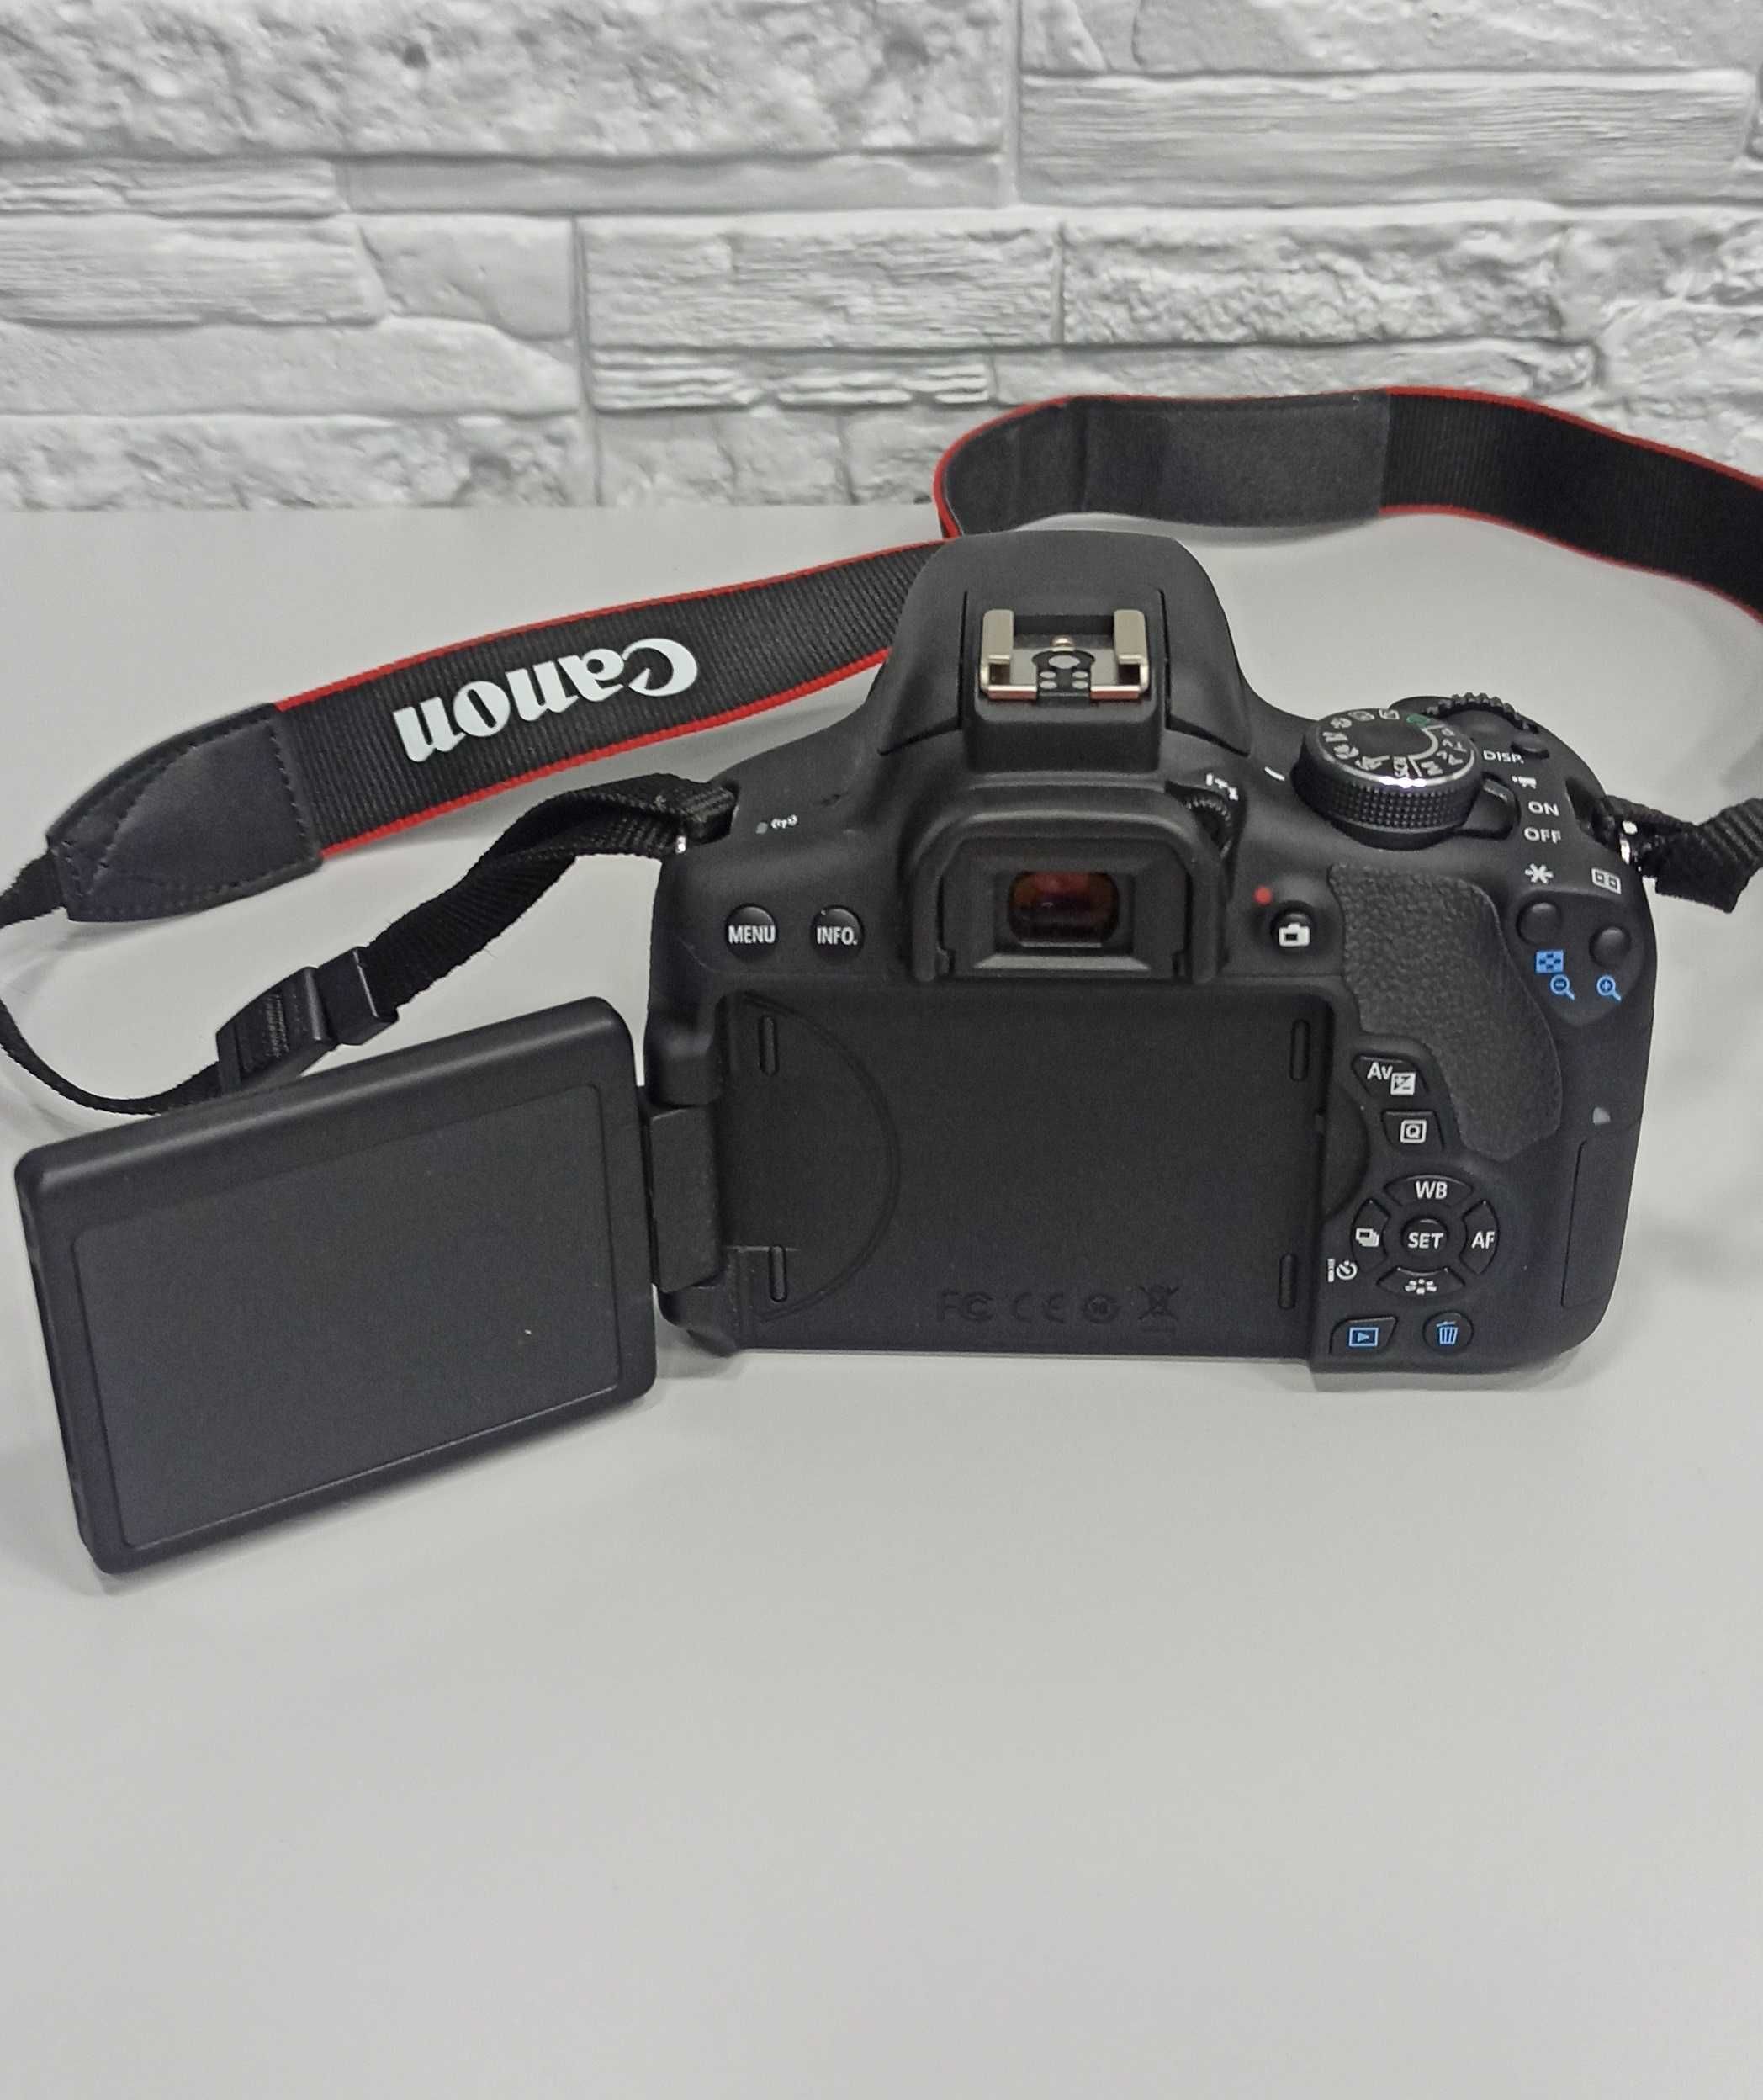 Фотоапарат Canon EOS Rebel T6i / 750D kit (18-55mm) EF-S DC III